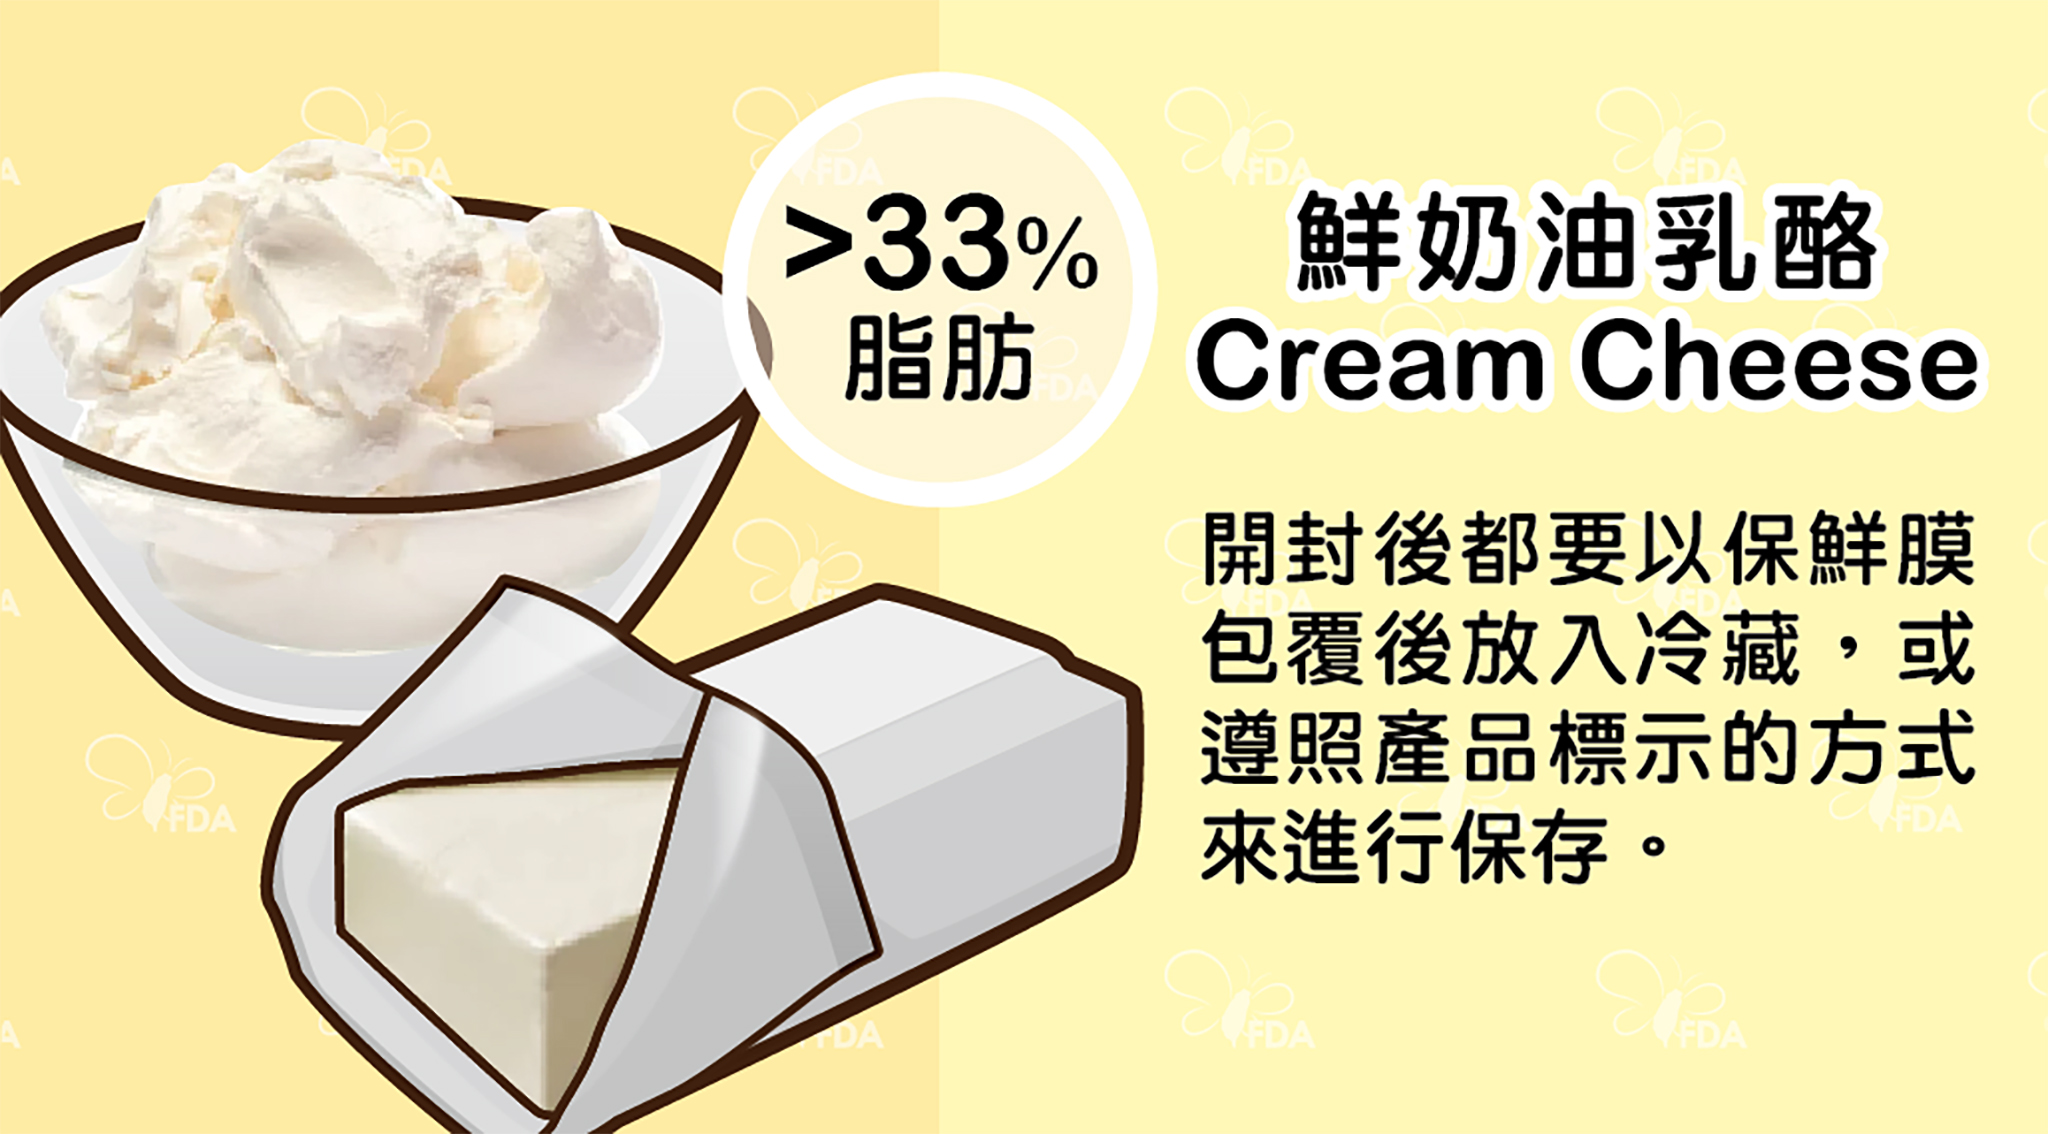 Cream cheese開封後要以保鮮膜包覆後冷藏，並盡快食用。